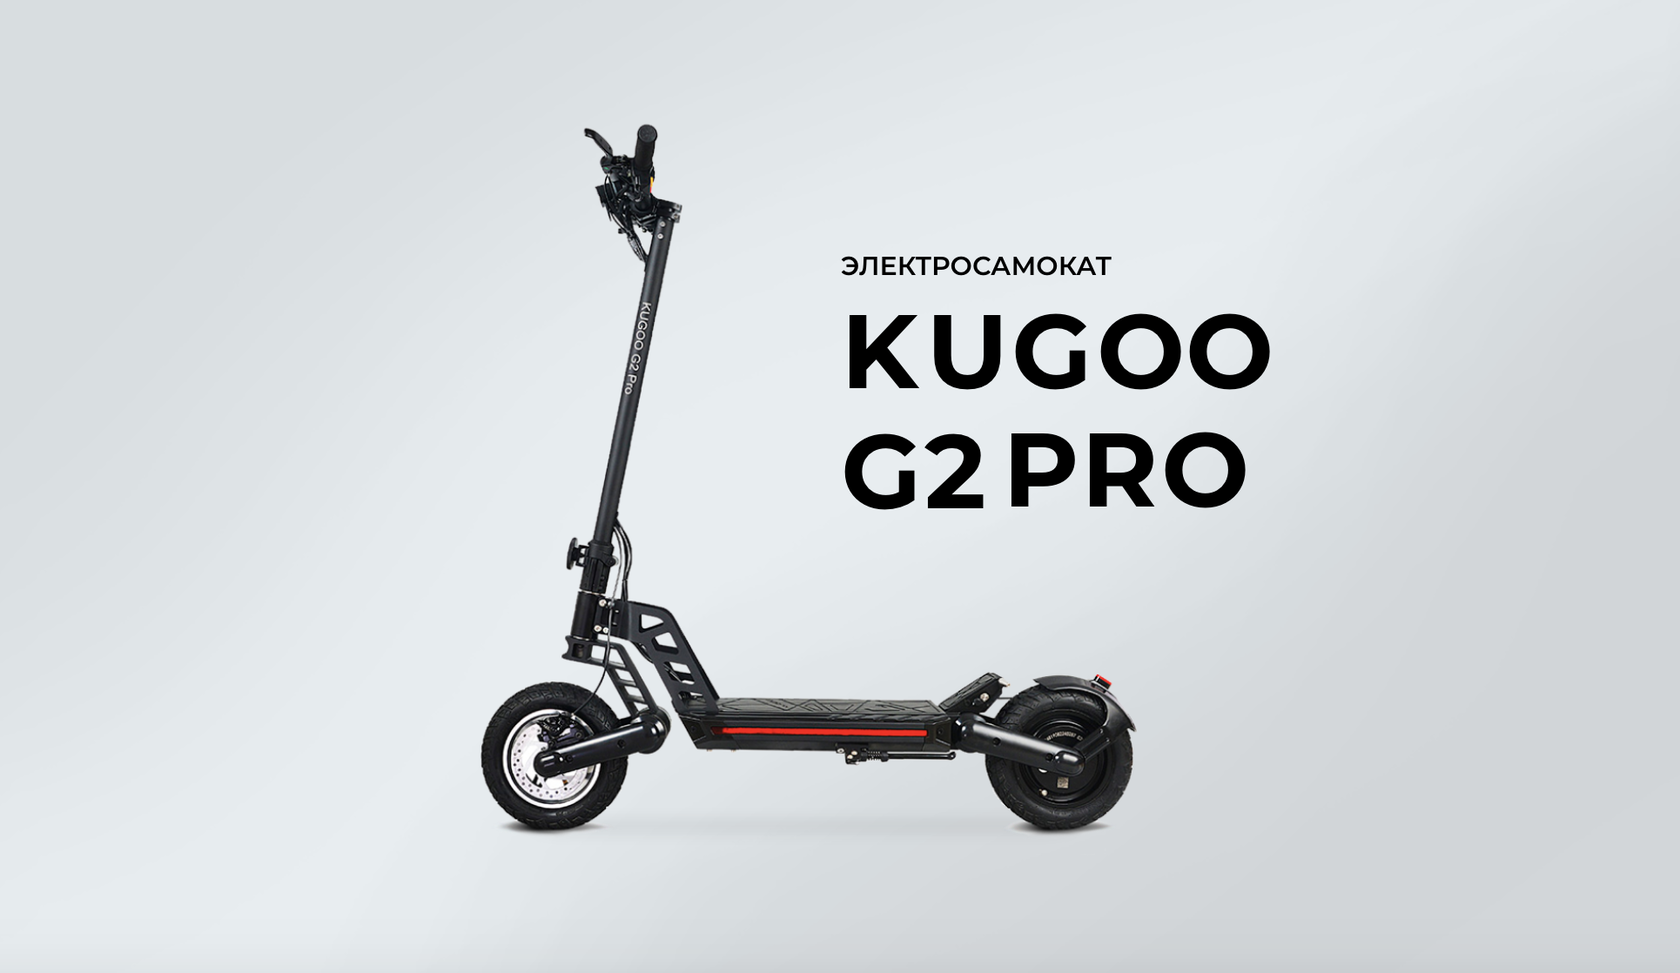 Kugoo g2 pro характеристики